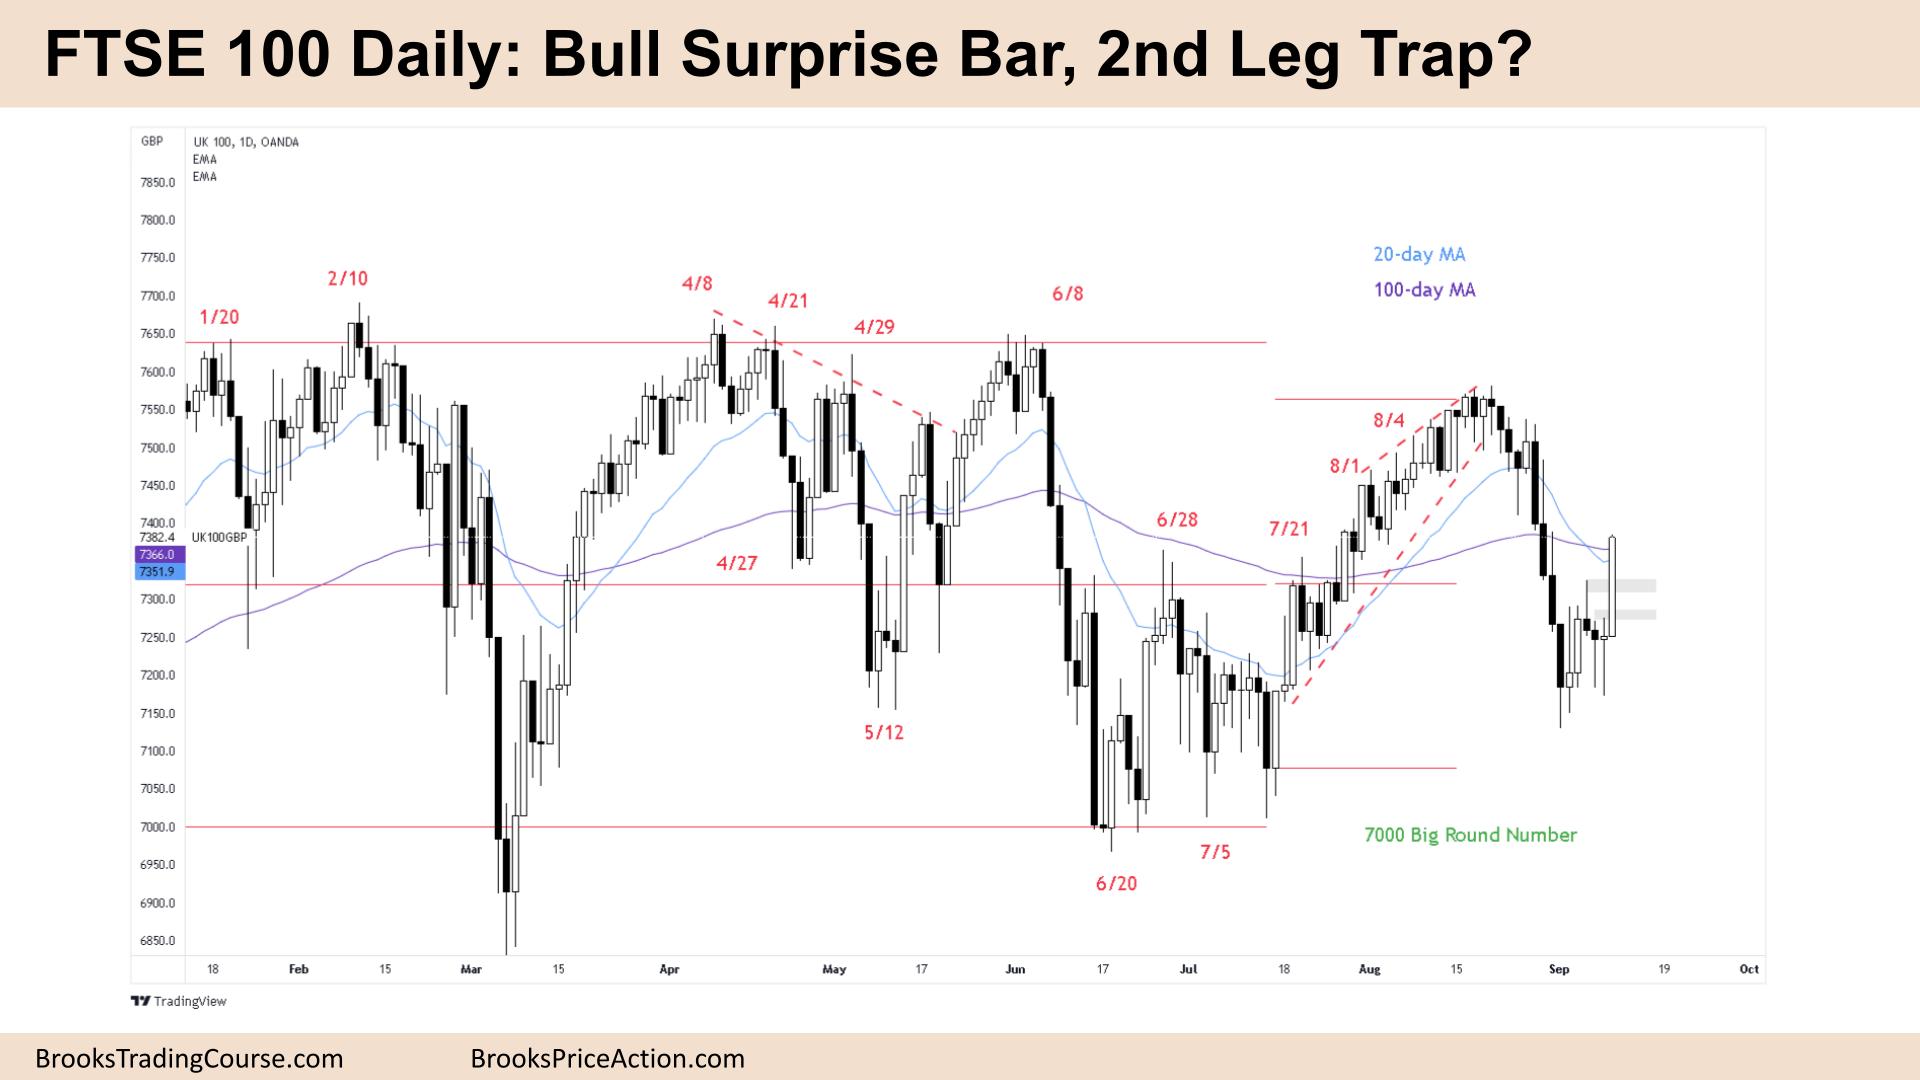 FTSE 100 Bull Surprise Bar 2nd Leg Trap